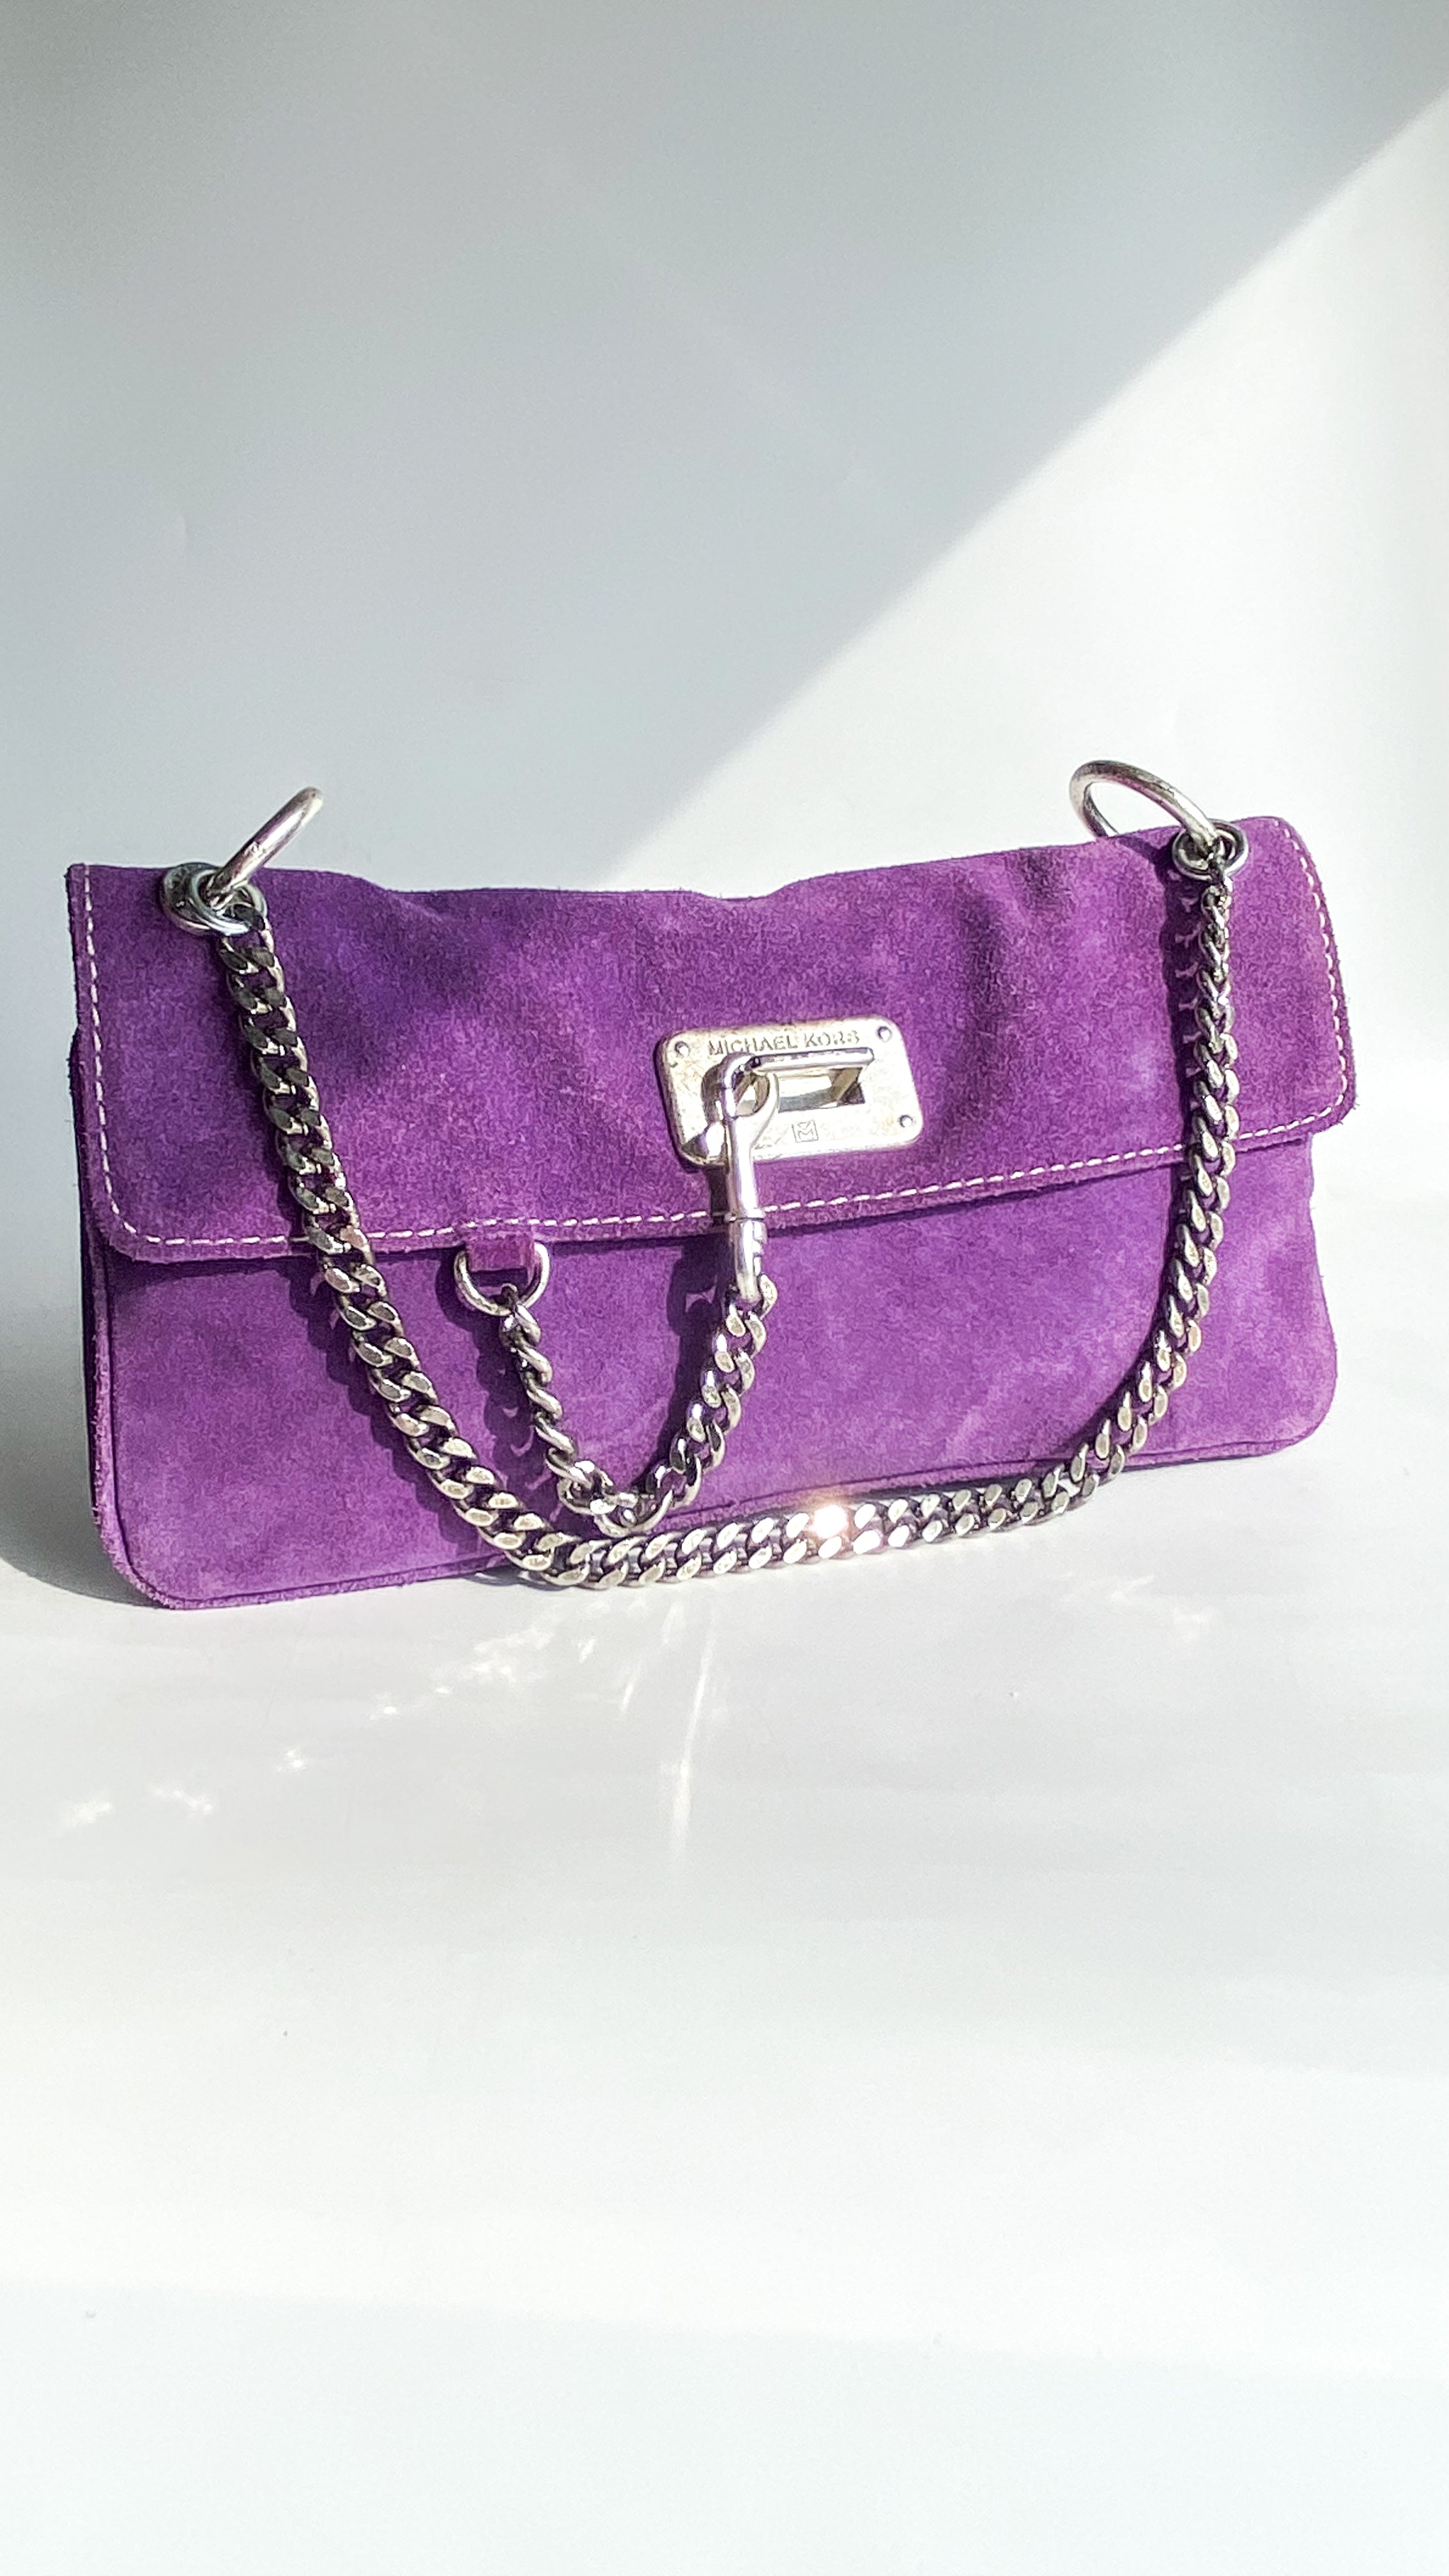 Pin by Samantha Hammack on handbags & clutches | Bags, Handbags michael kors,  Michael kors bag